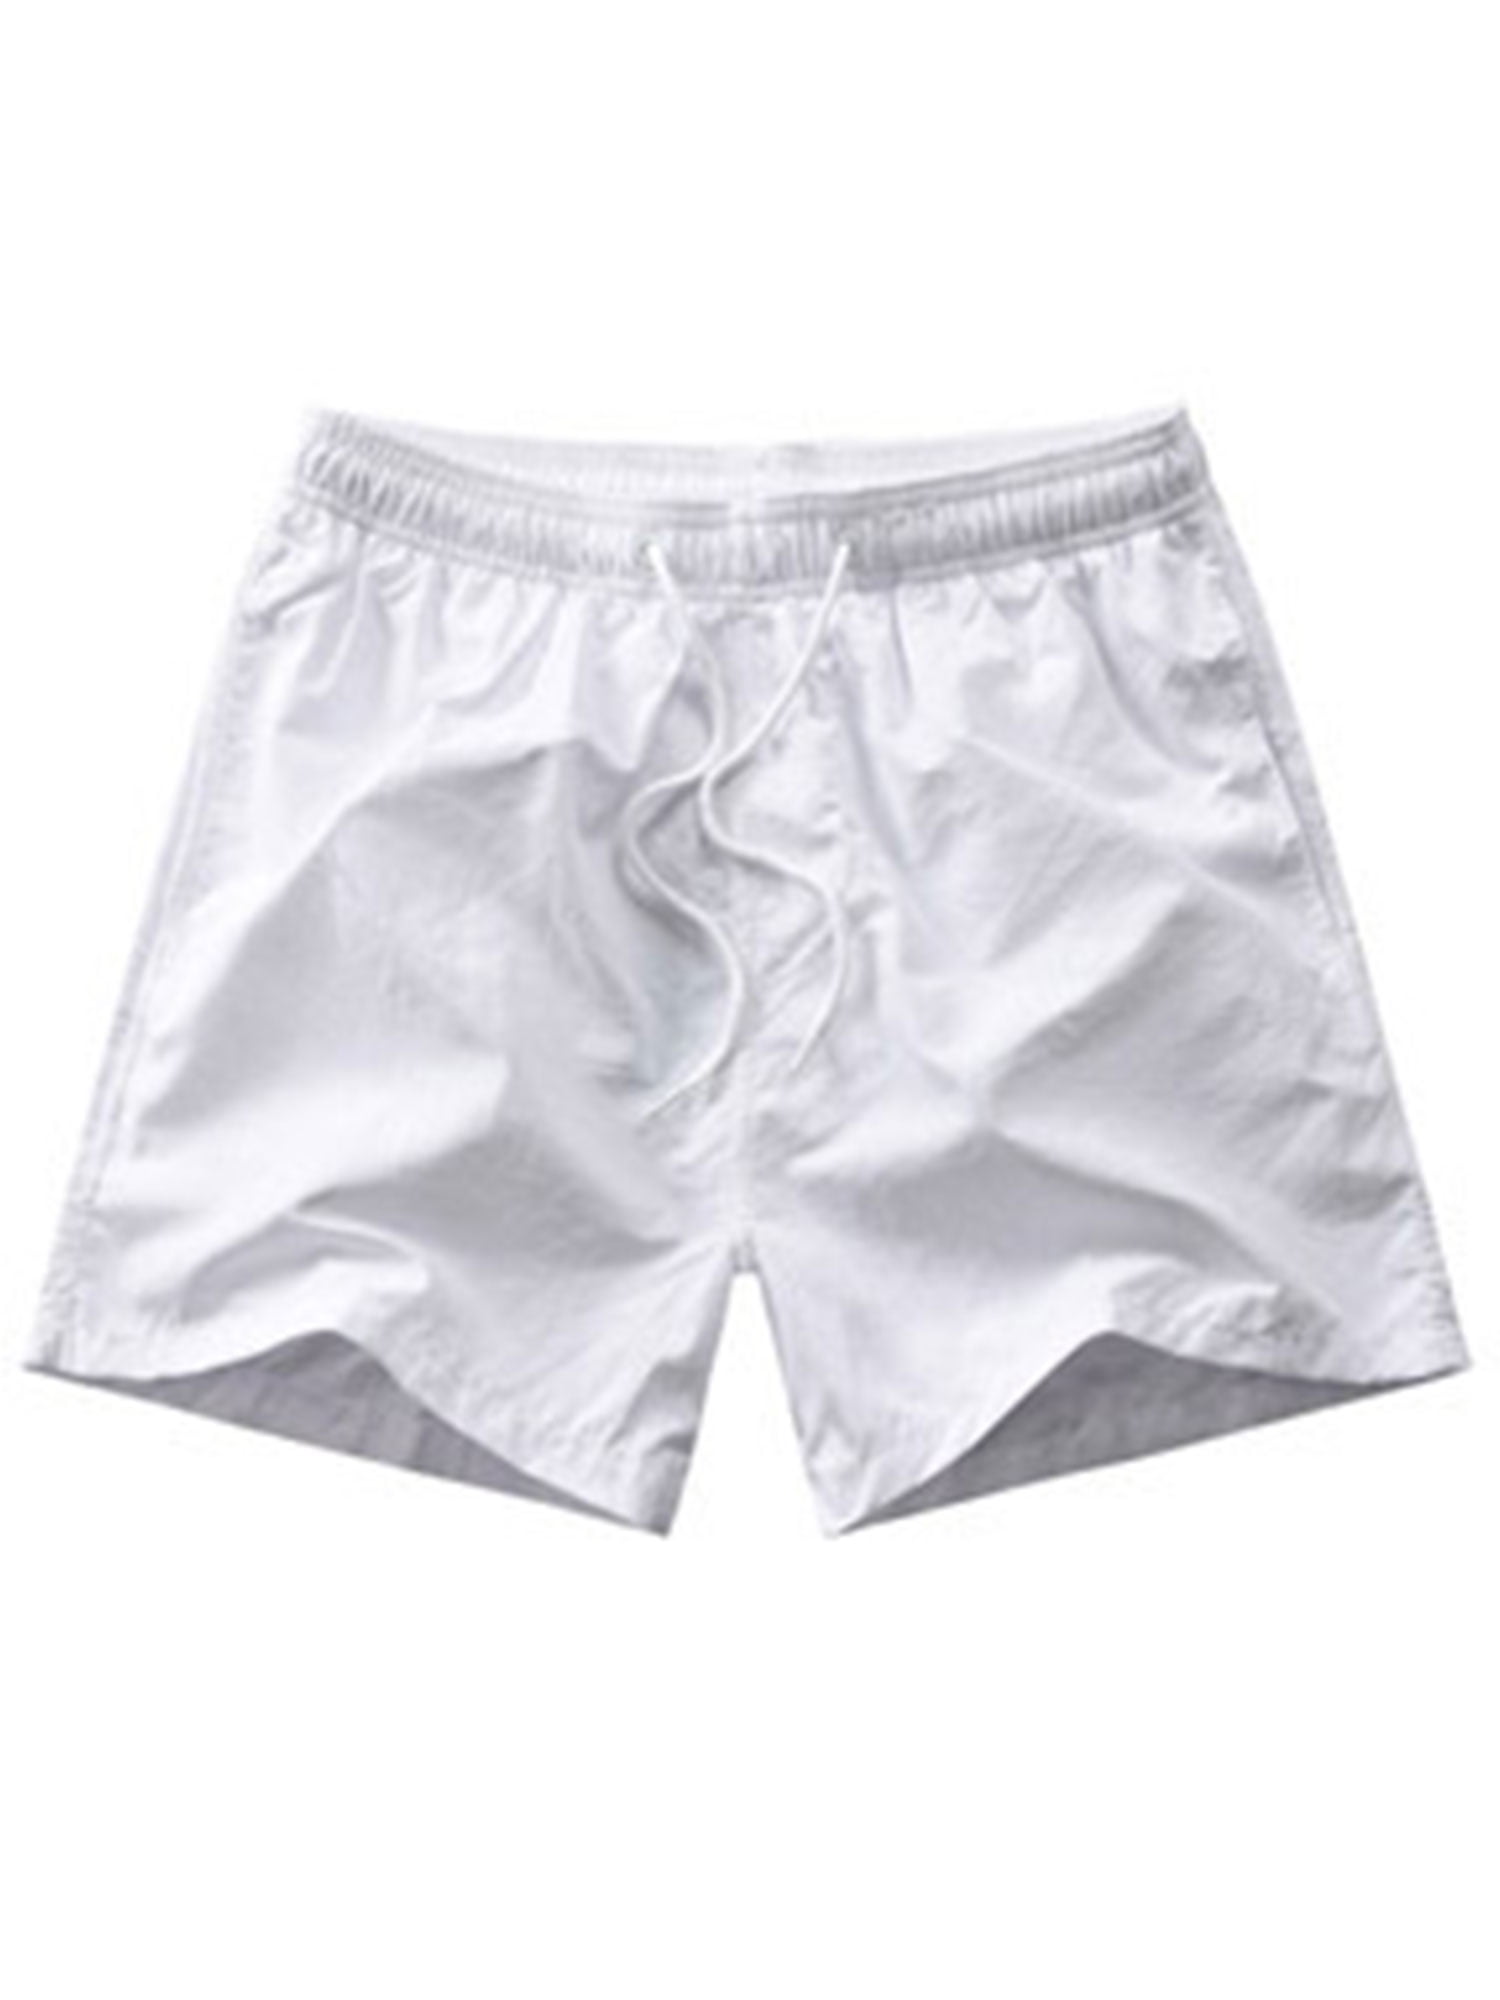 Drawstring Pants Beach Shorts with Elastic Waist Party SAMACHICA Men's Fashion Shorts Summer Casual Short 